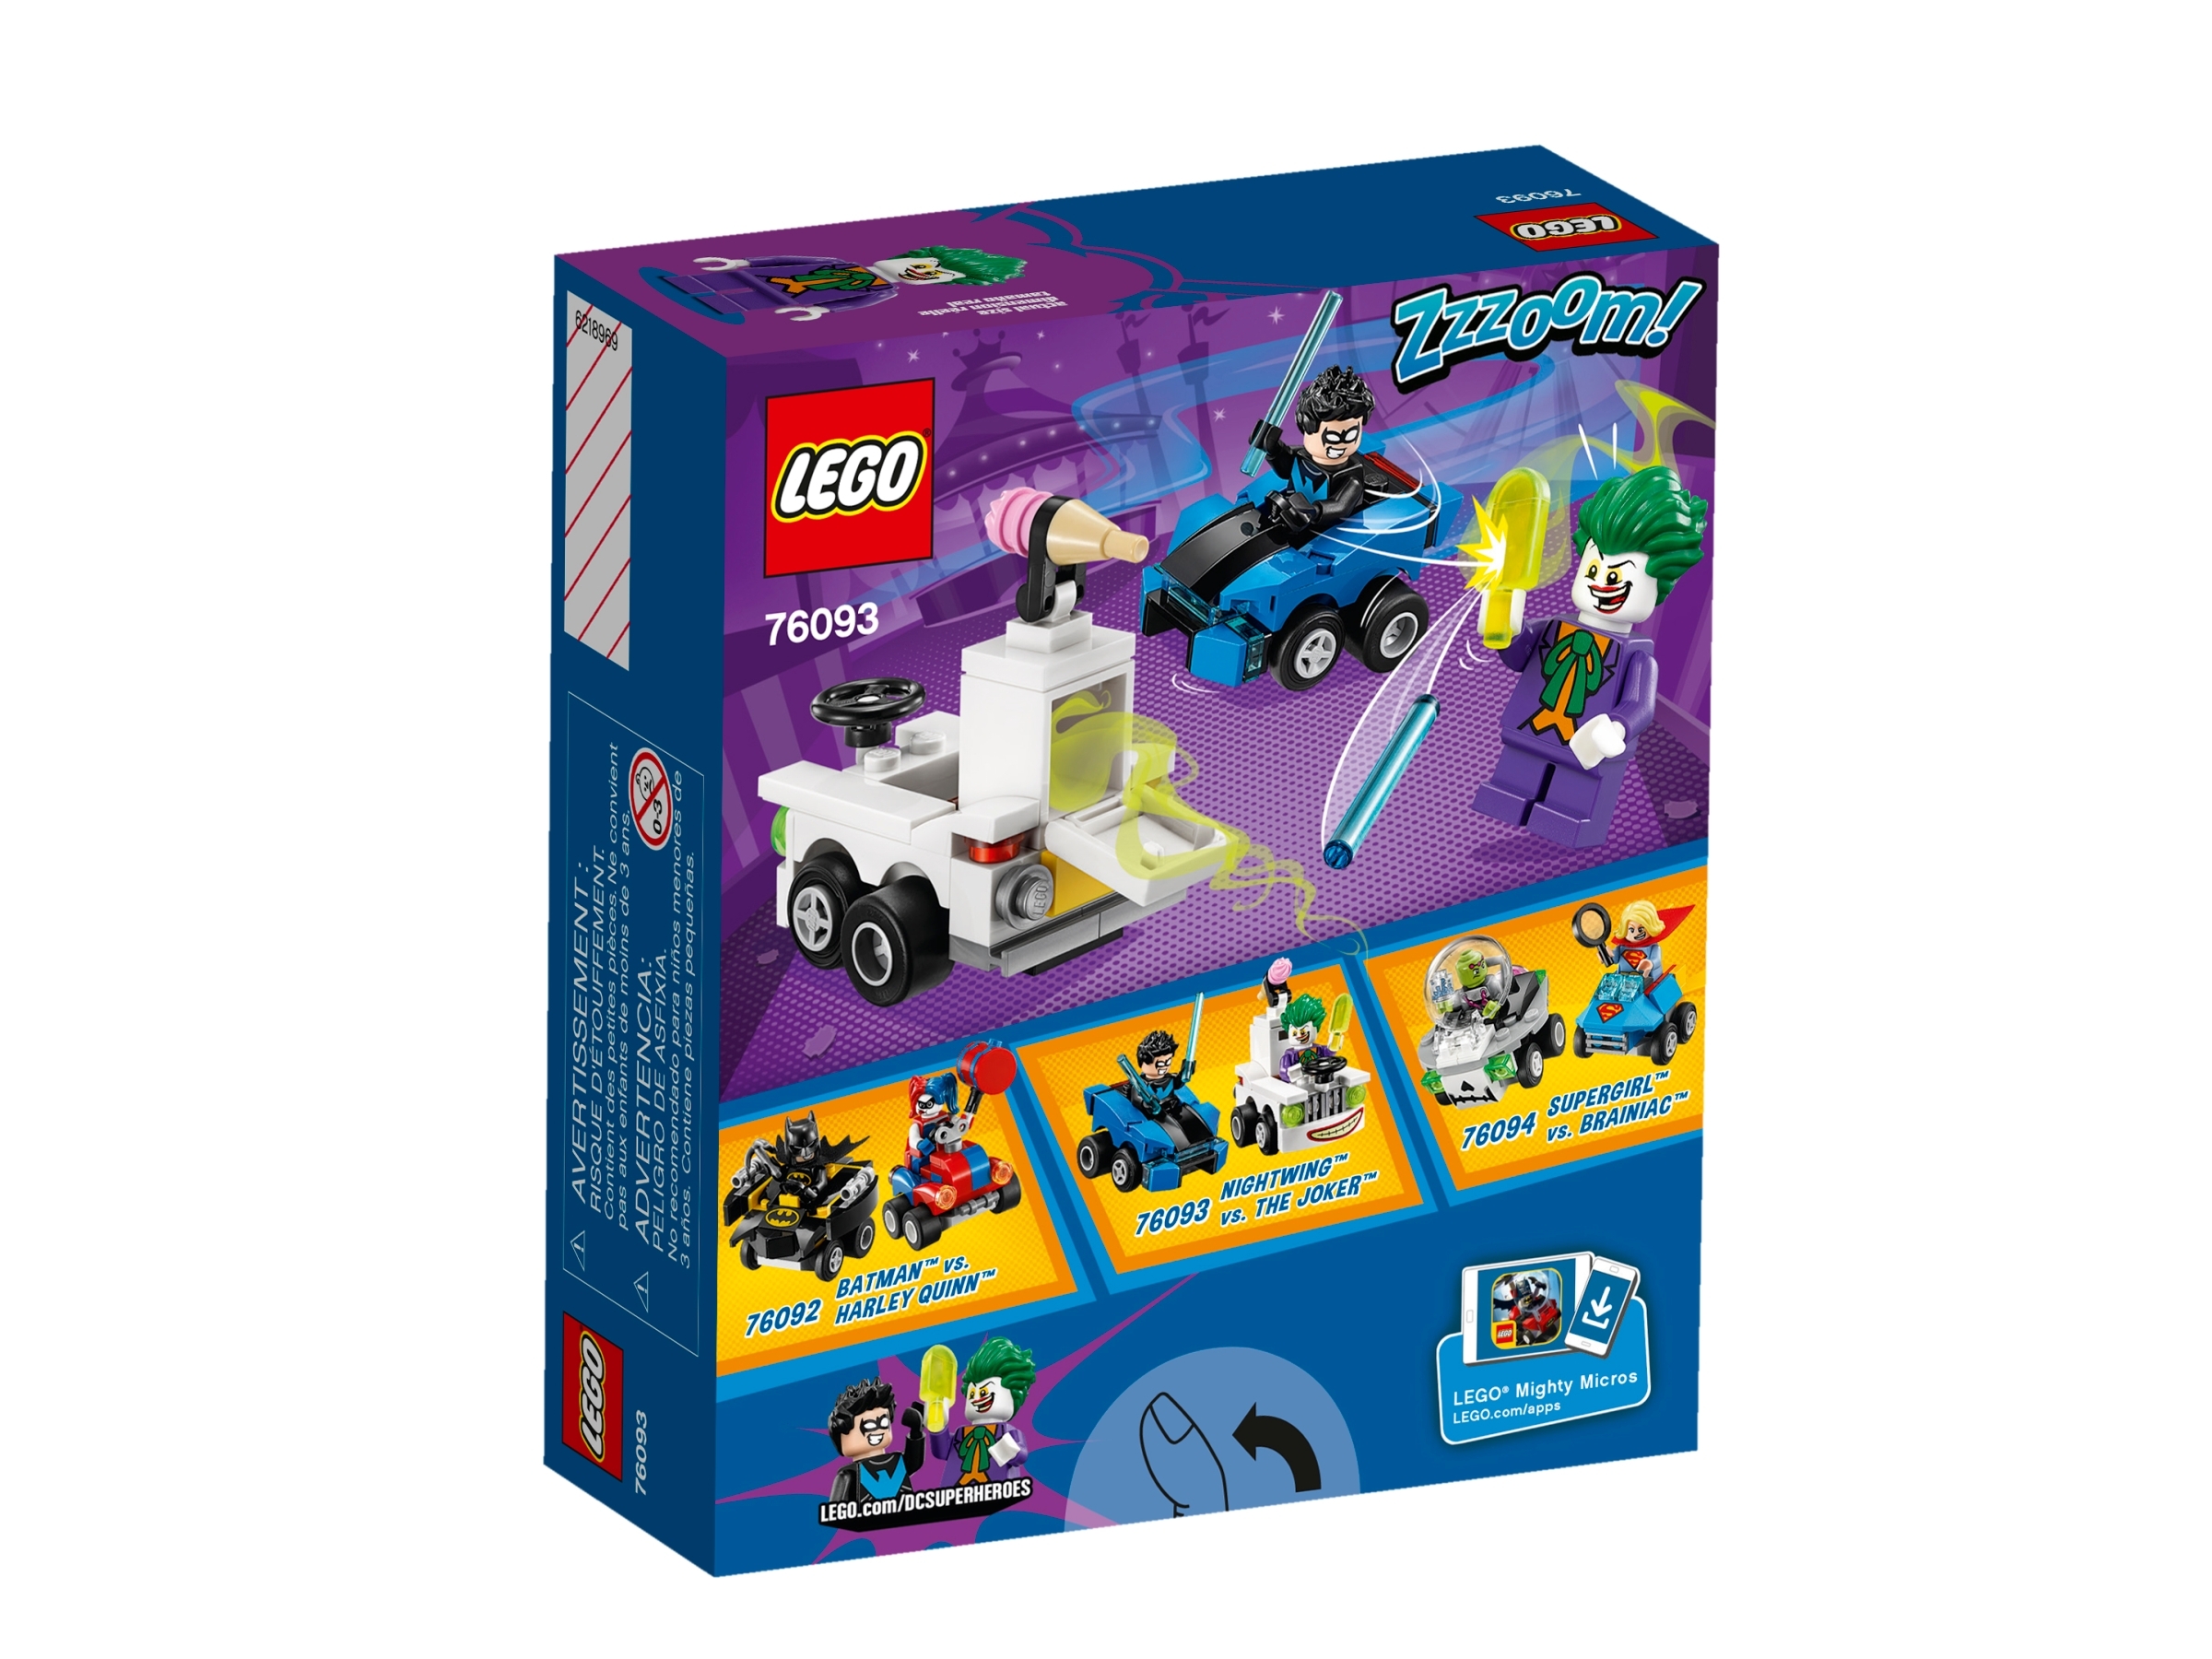 76093 passes ™ vs LEGO ® Mighty Micros NOUVEAU & NEUF dans sa boîte! The Joker ™ 